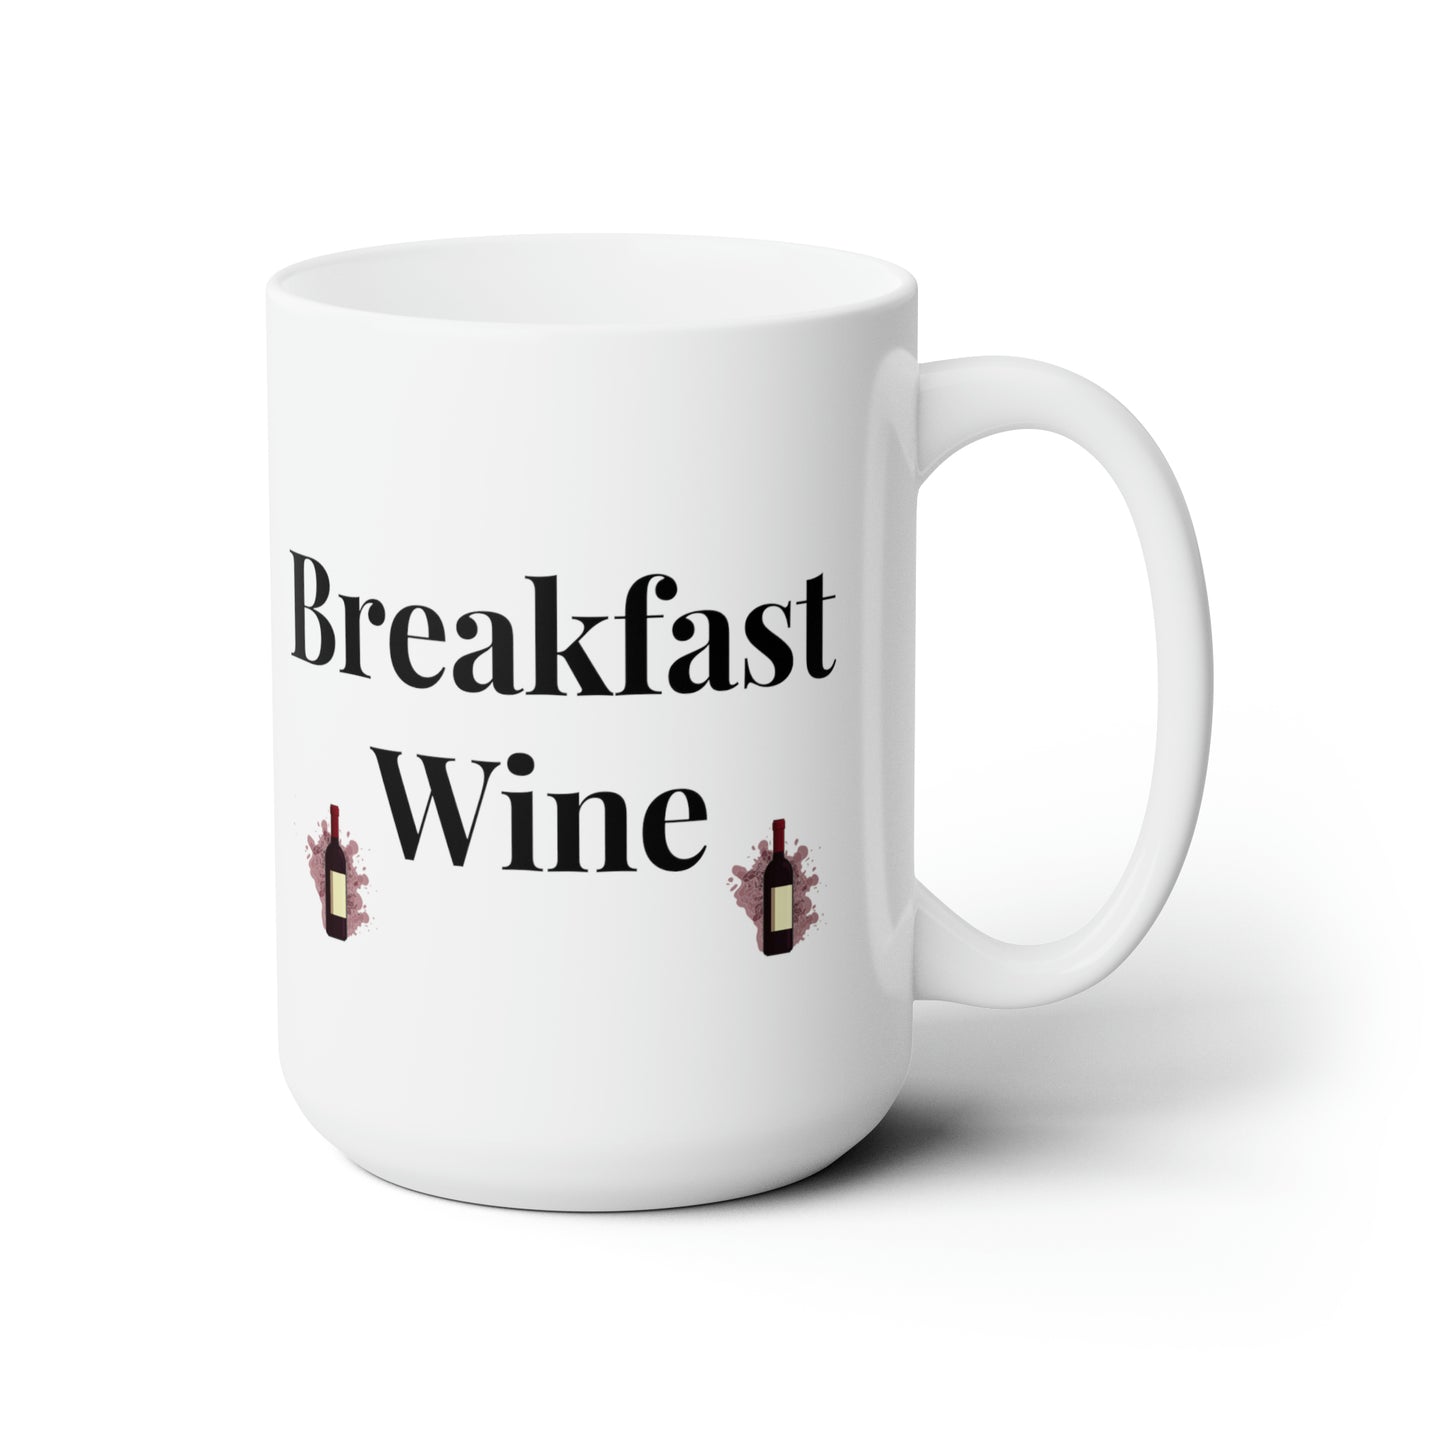 Breakfast Wine Ceramic Coffee Mug 15oz